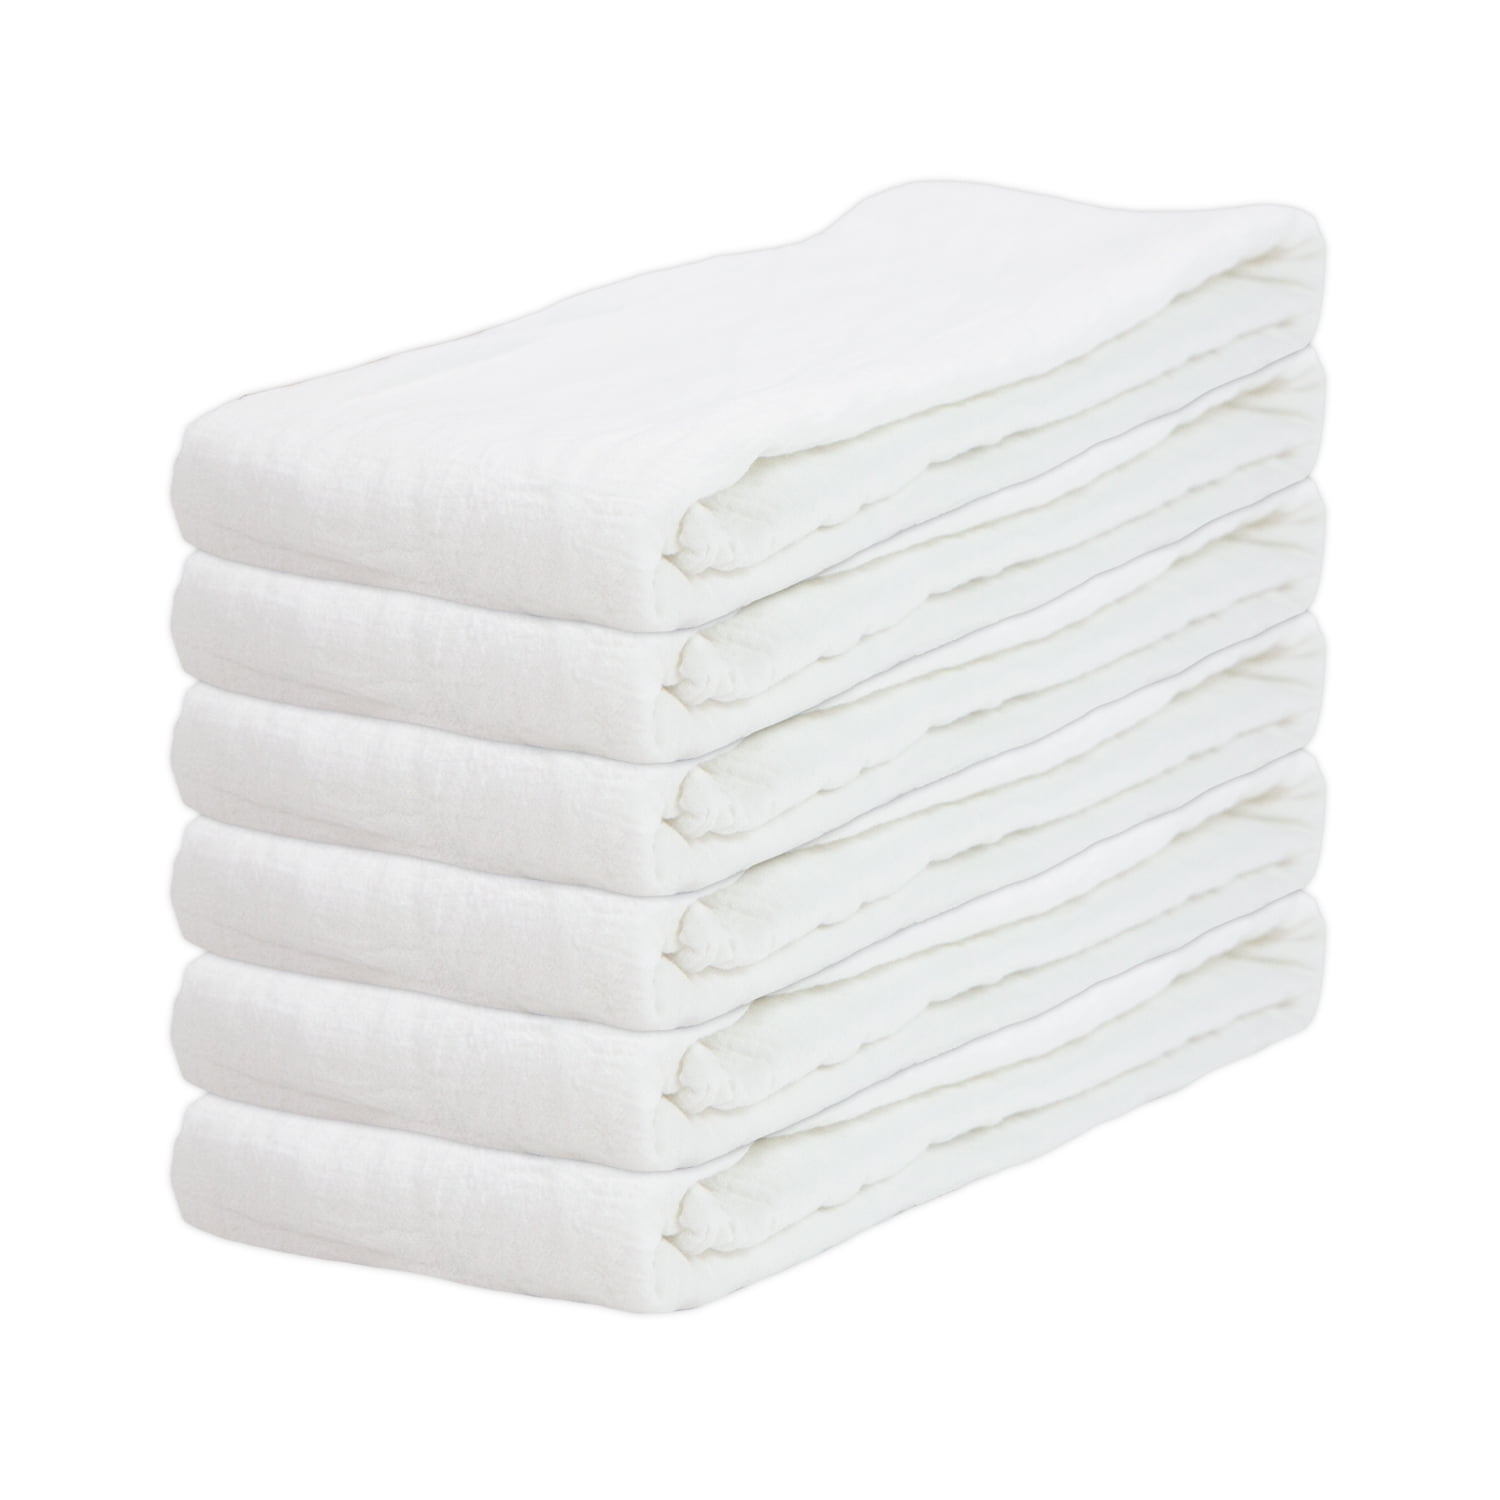 Animal Themed Tea Towels Pack of 2 same design 100% Cotton Super Value Gift 